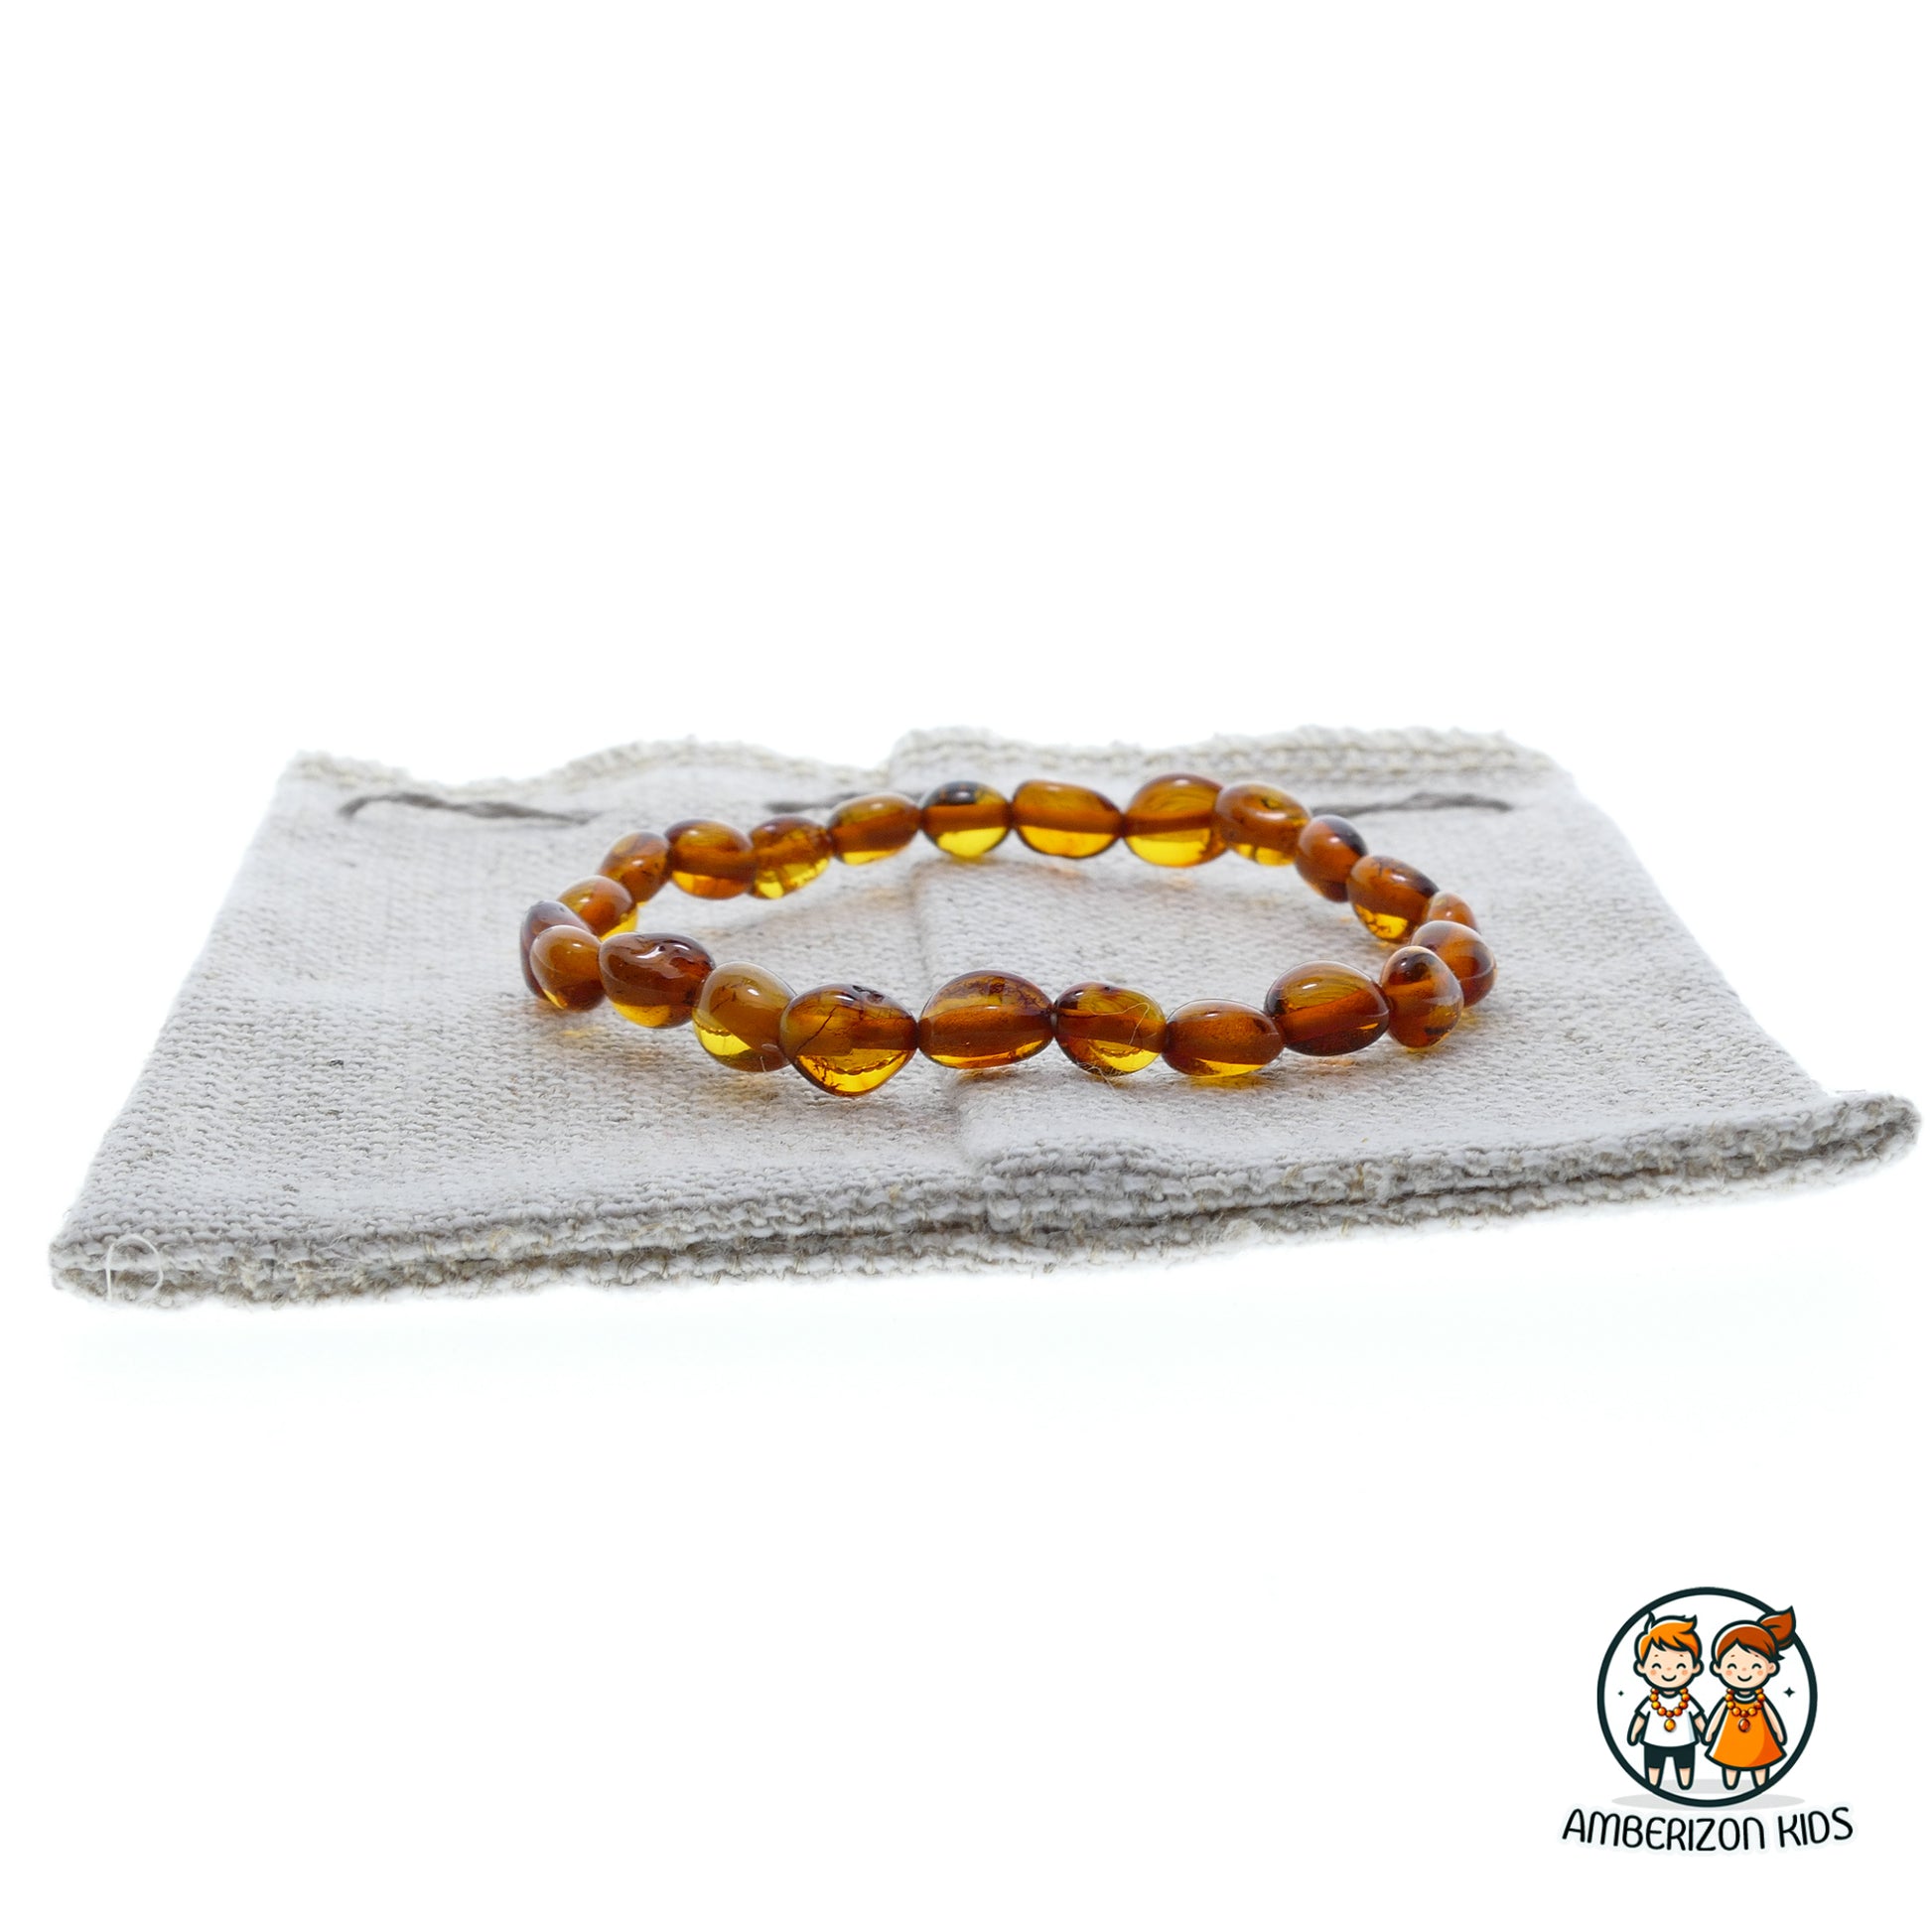 4.5-7mm beans - Unisex Baltic amber baby bracelet - Cognac color polished bean shape beads